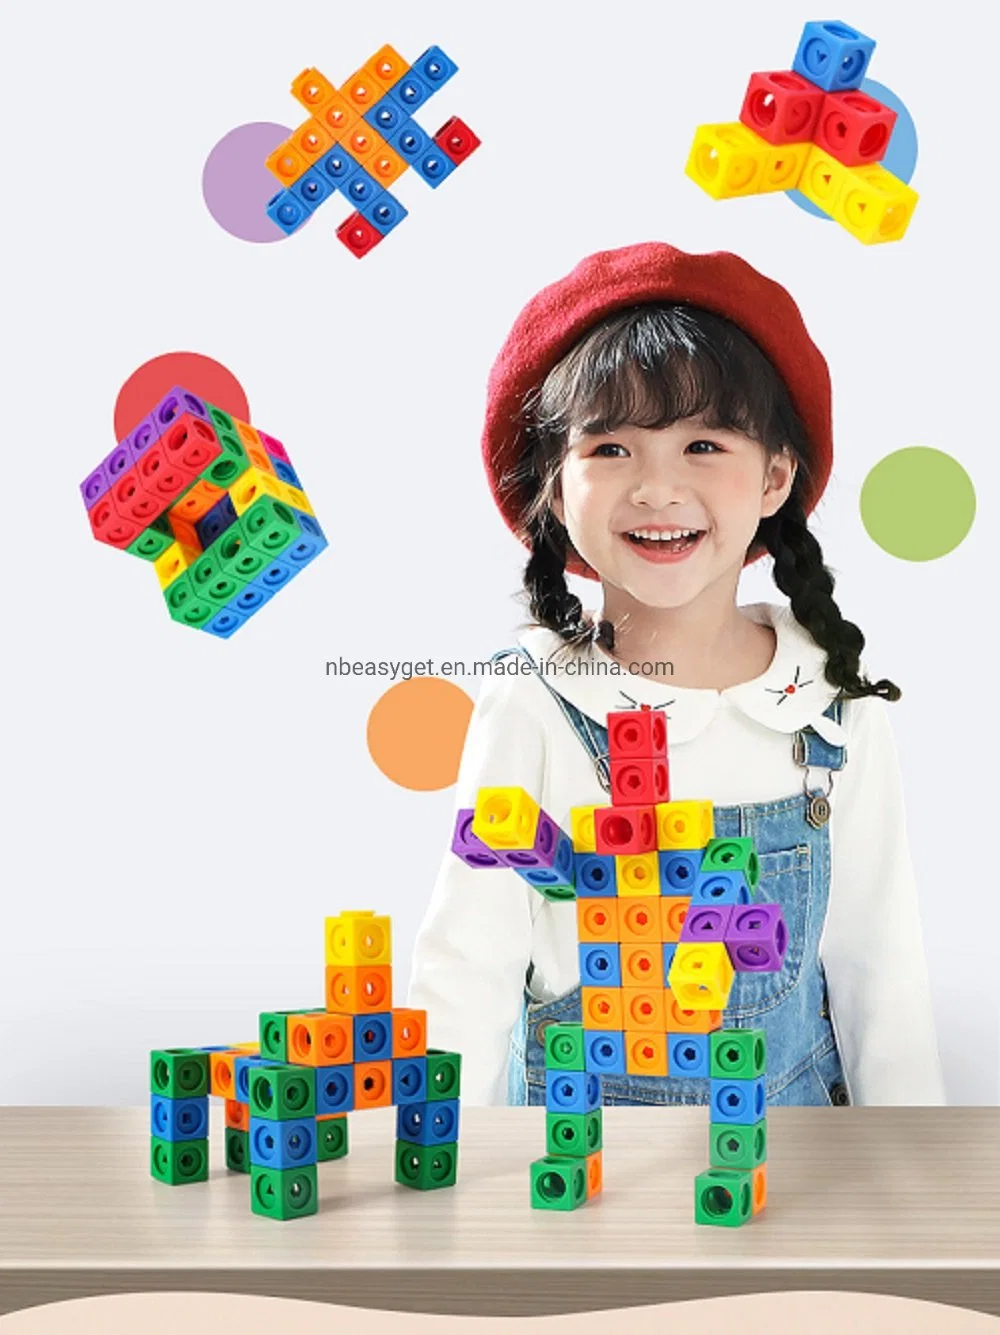 Mathlink Cube Activity Set Learning Resources Math Blocks Cube Educational Toys for Enhancing Early Math Skills Montessori Stem Esg17665